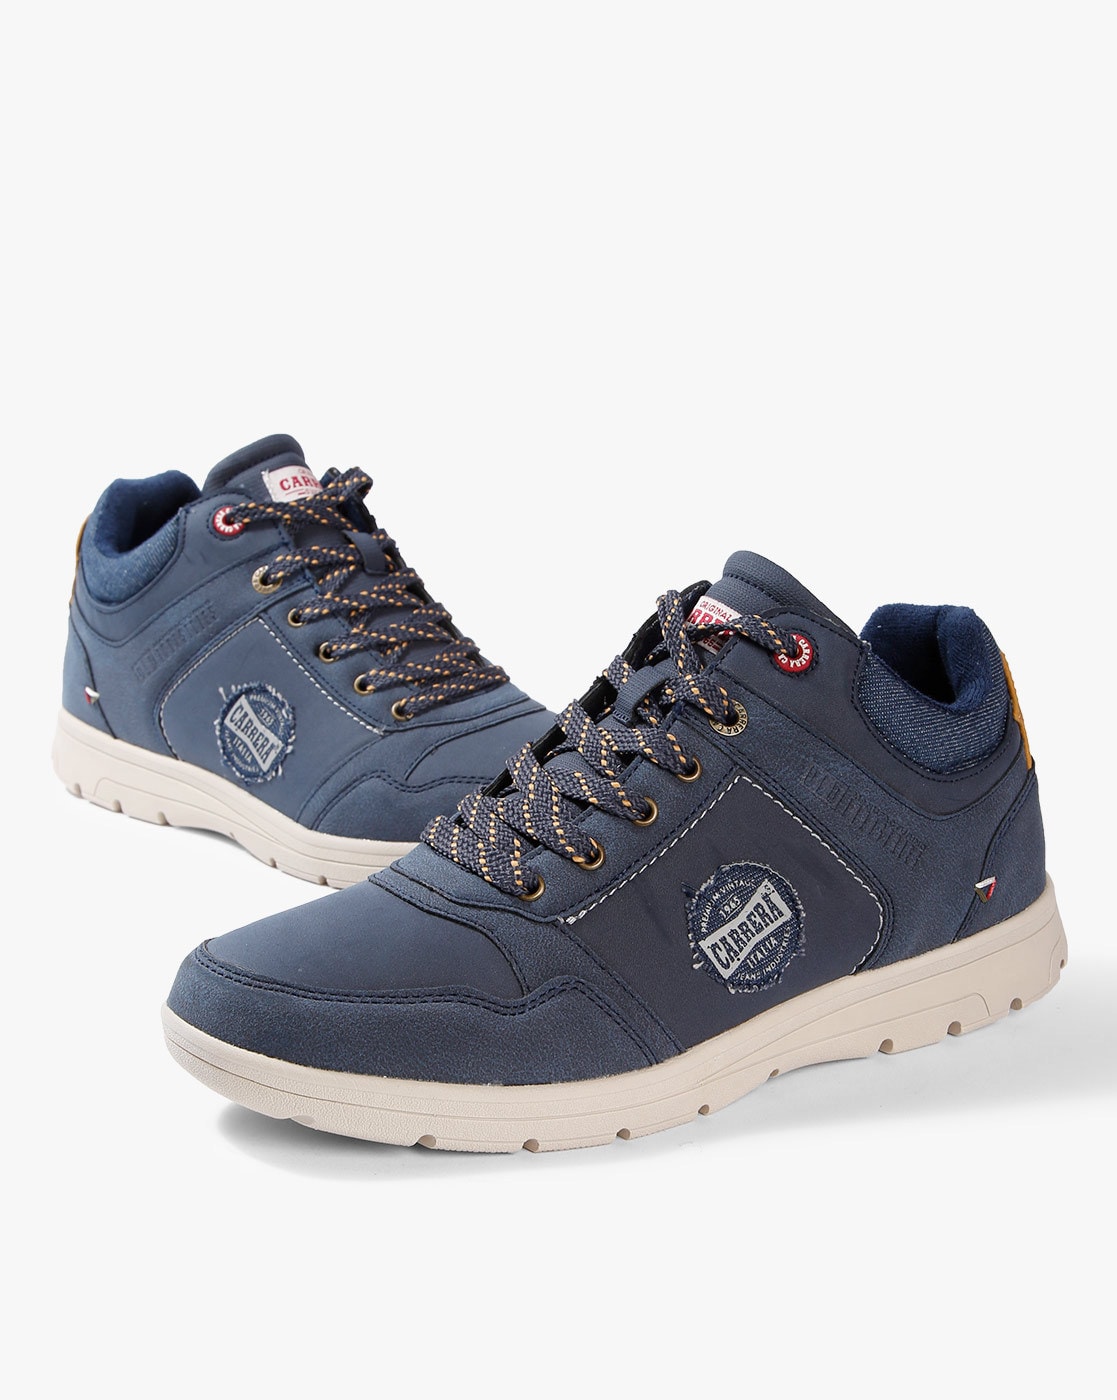 Buy Blue Sneakers for Men by CARRERA Online 